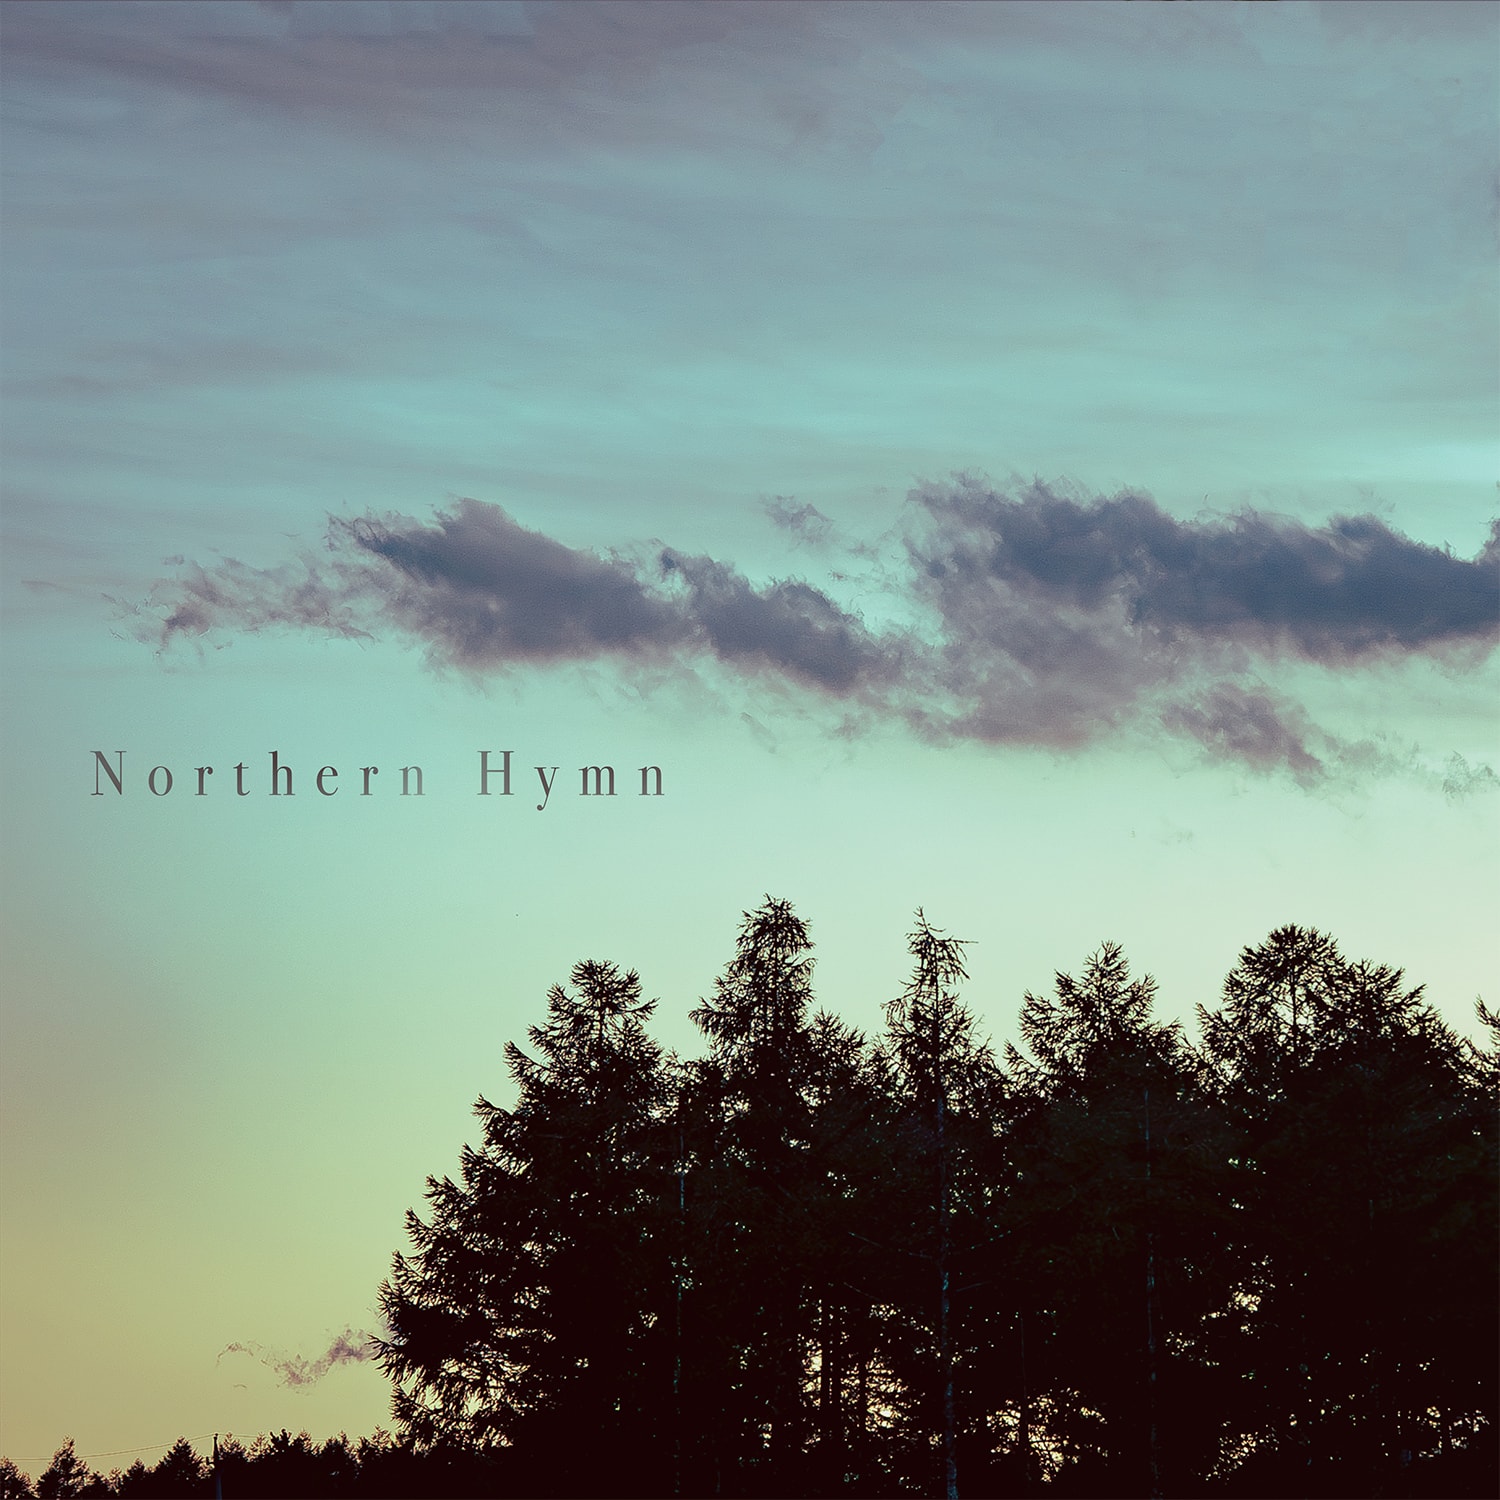 Northern Hymn